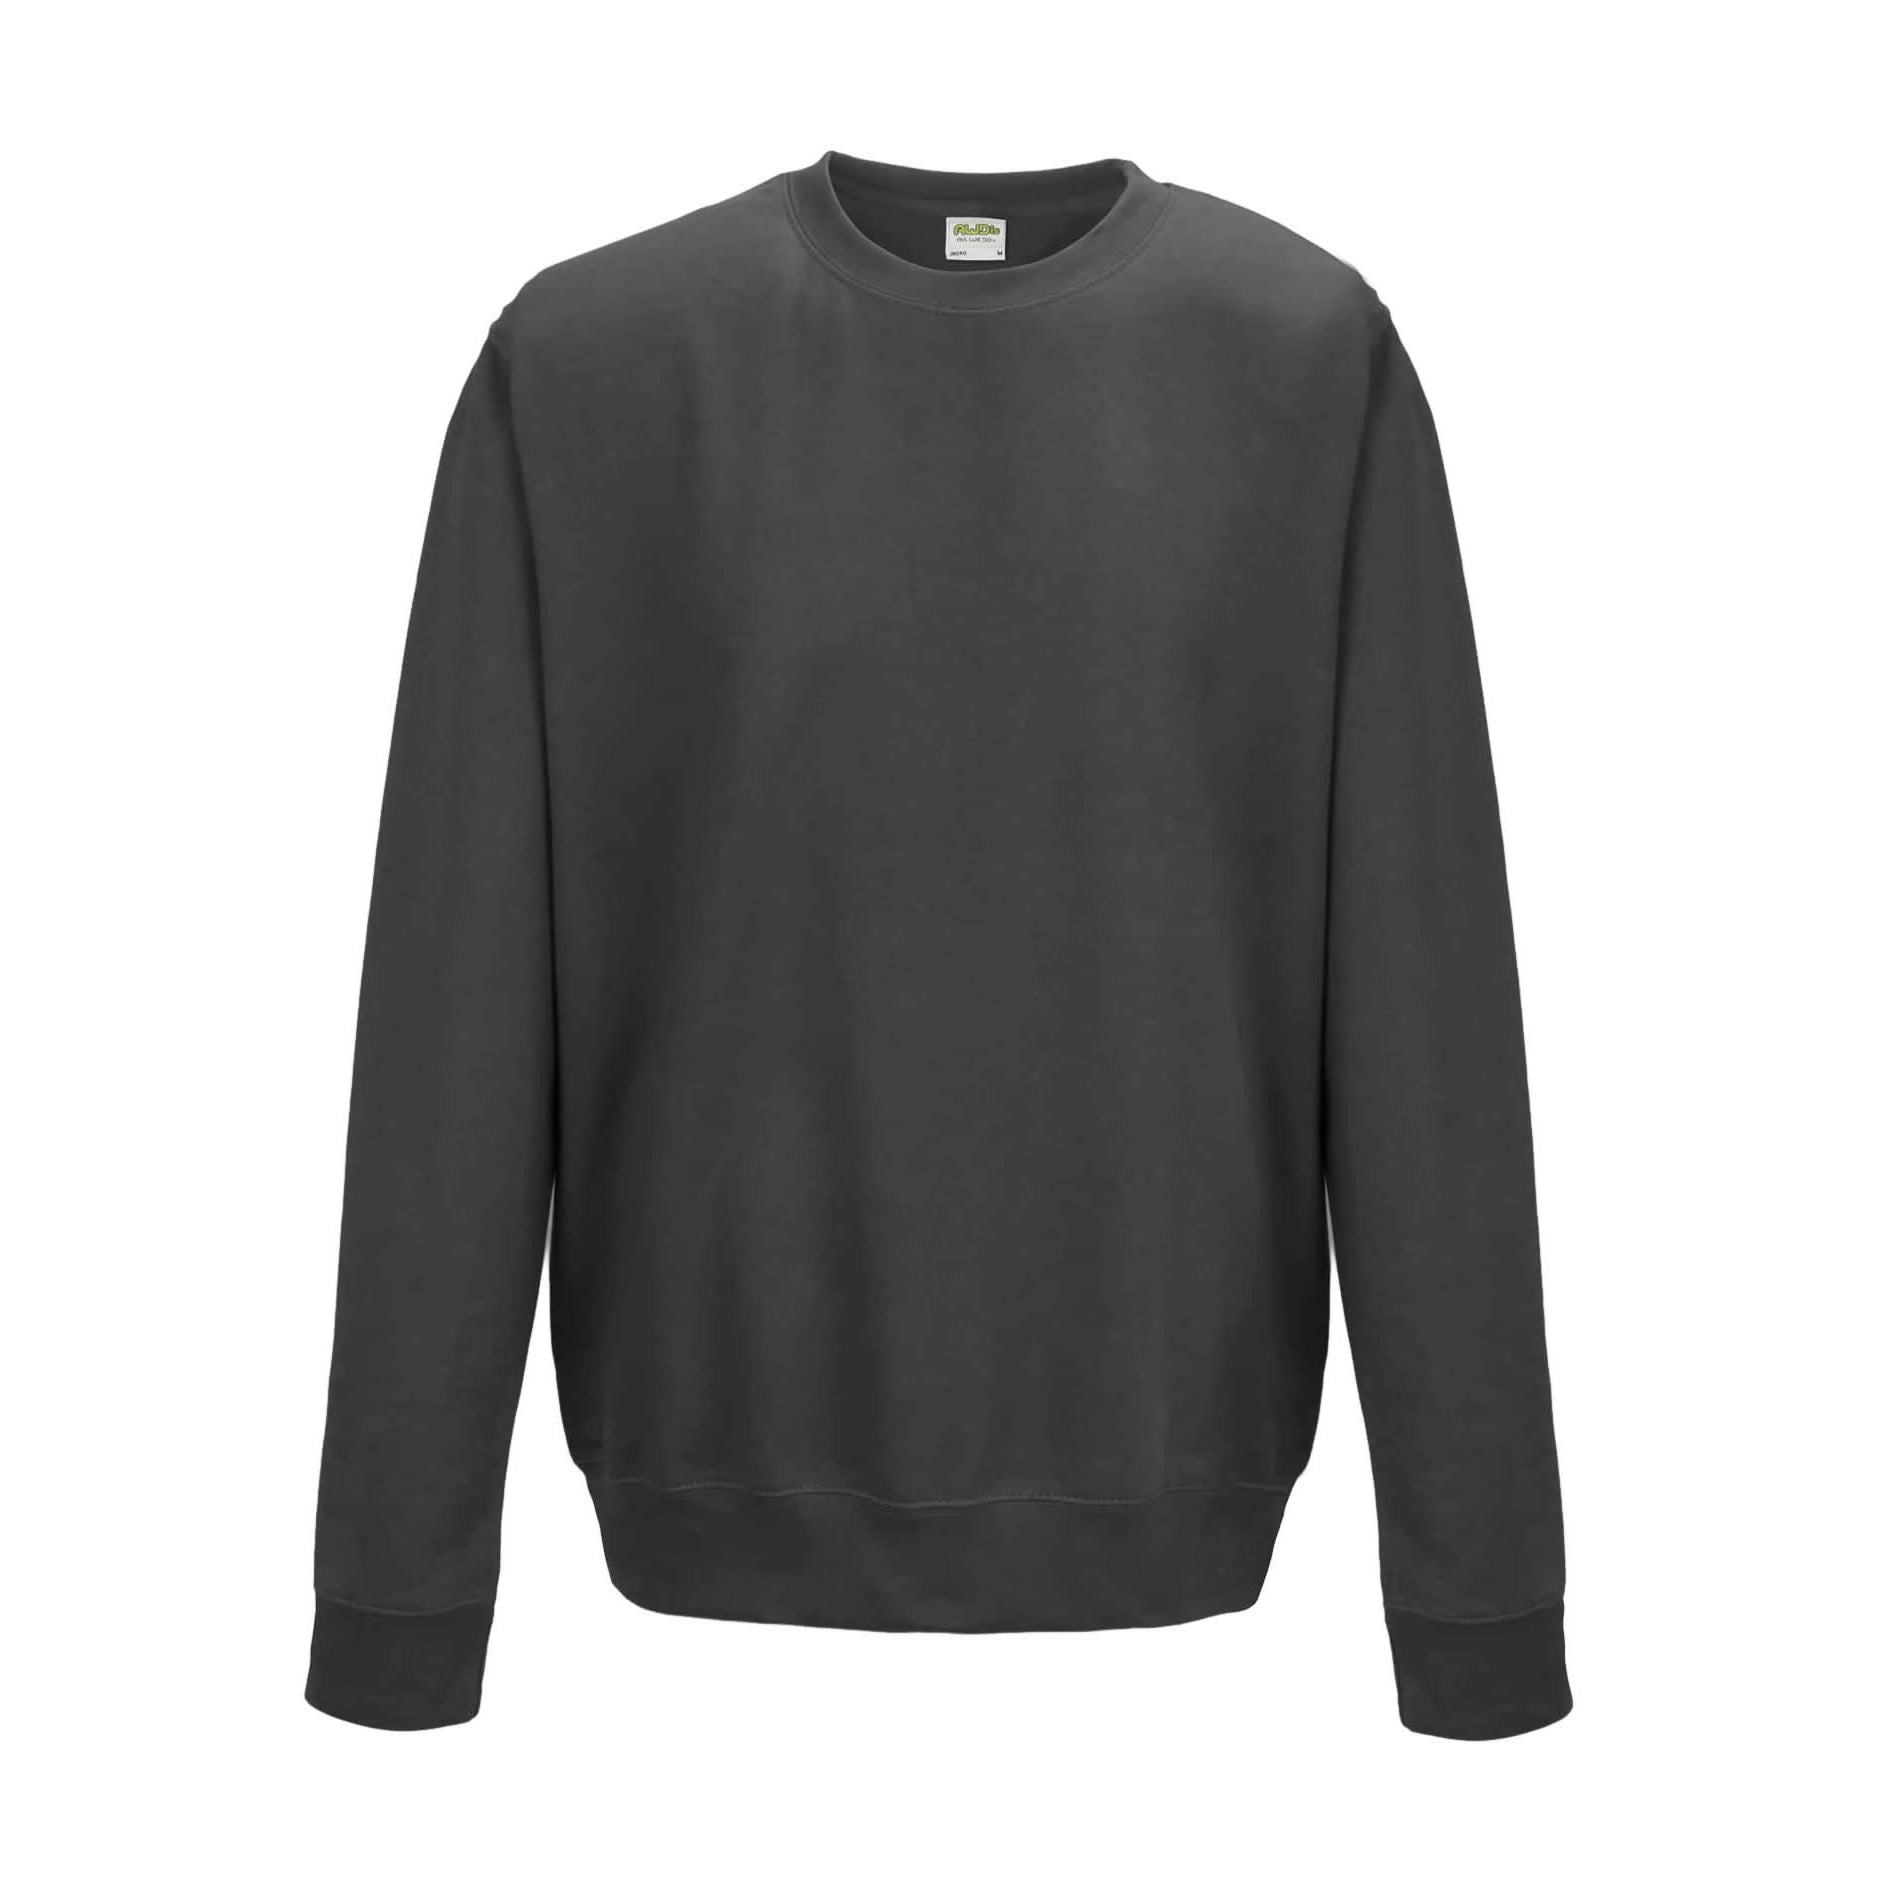 XL Charcoal Sweatshirt - choose logo